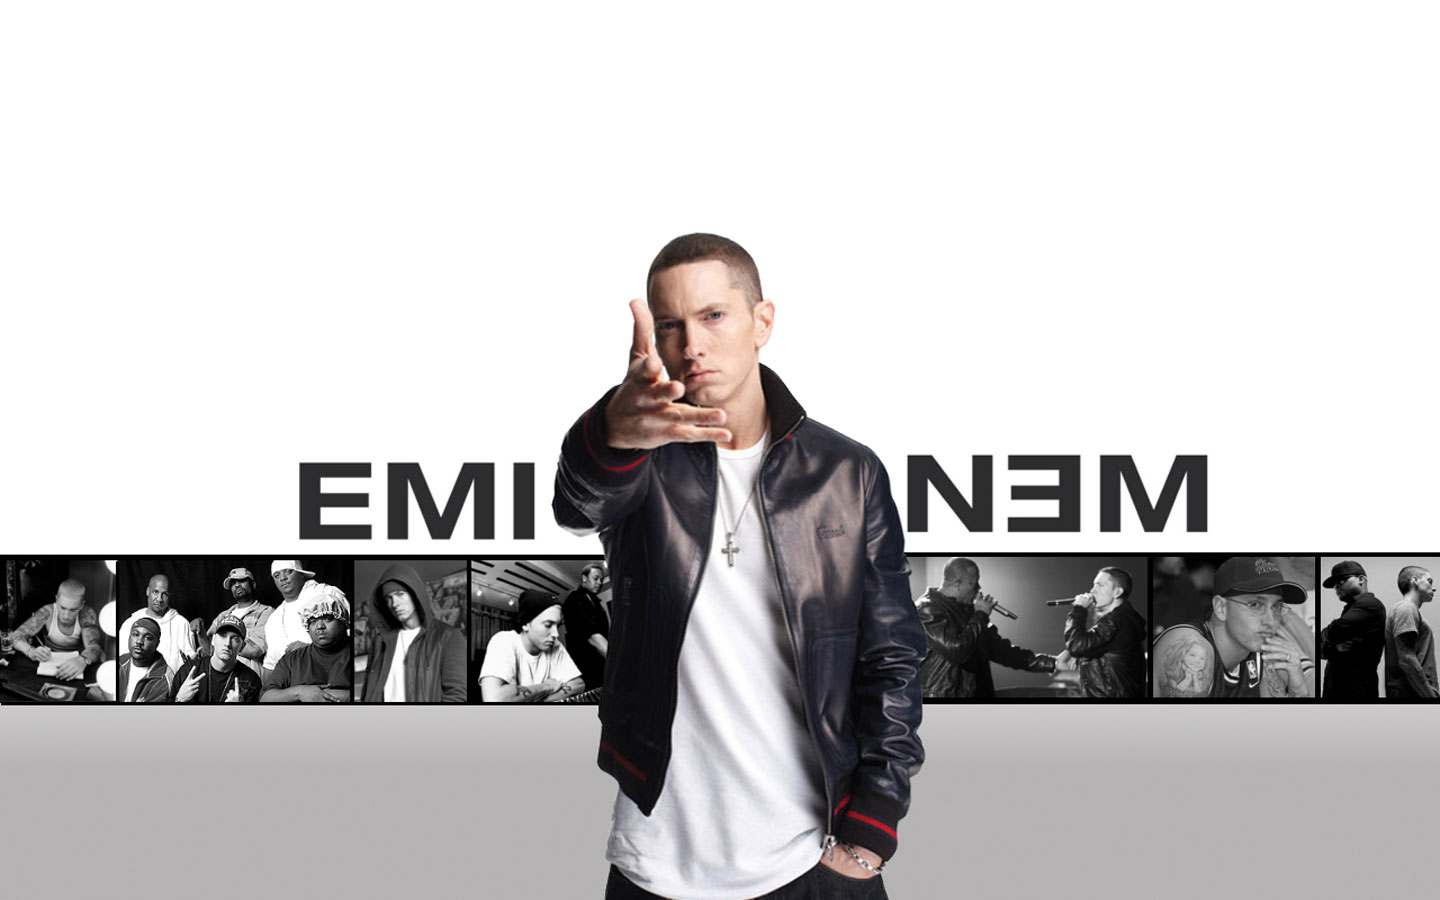 [49+] Eminem Wallpaper for Computer on WallpaperSafari